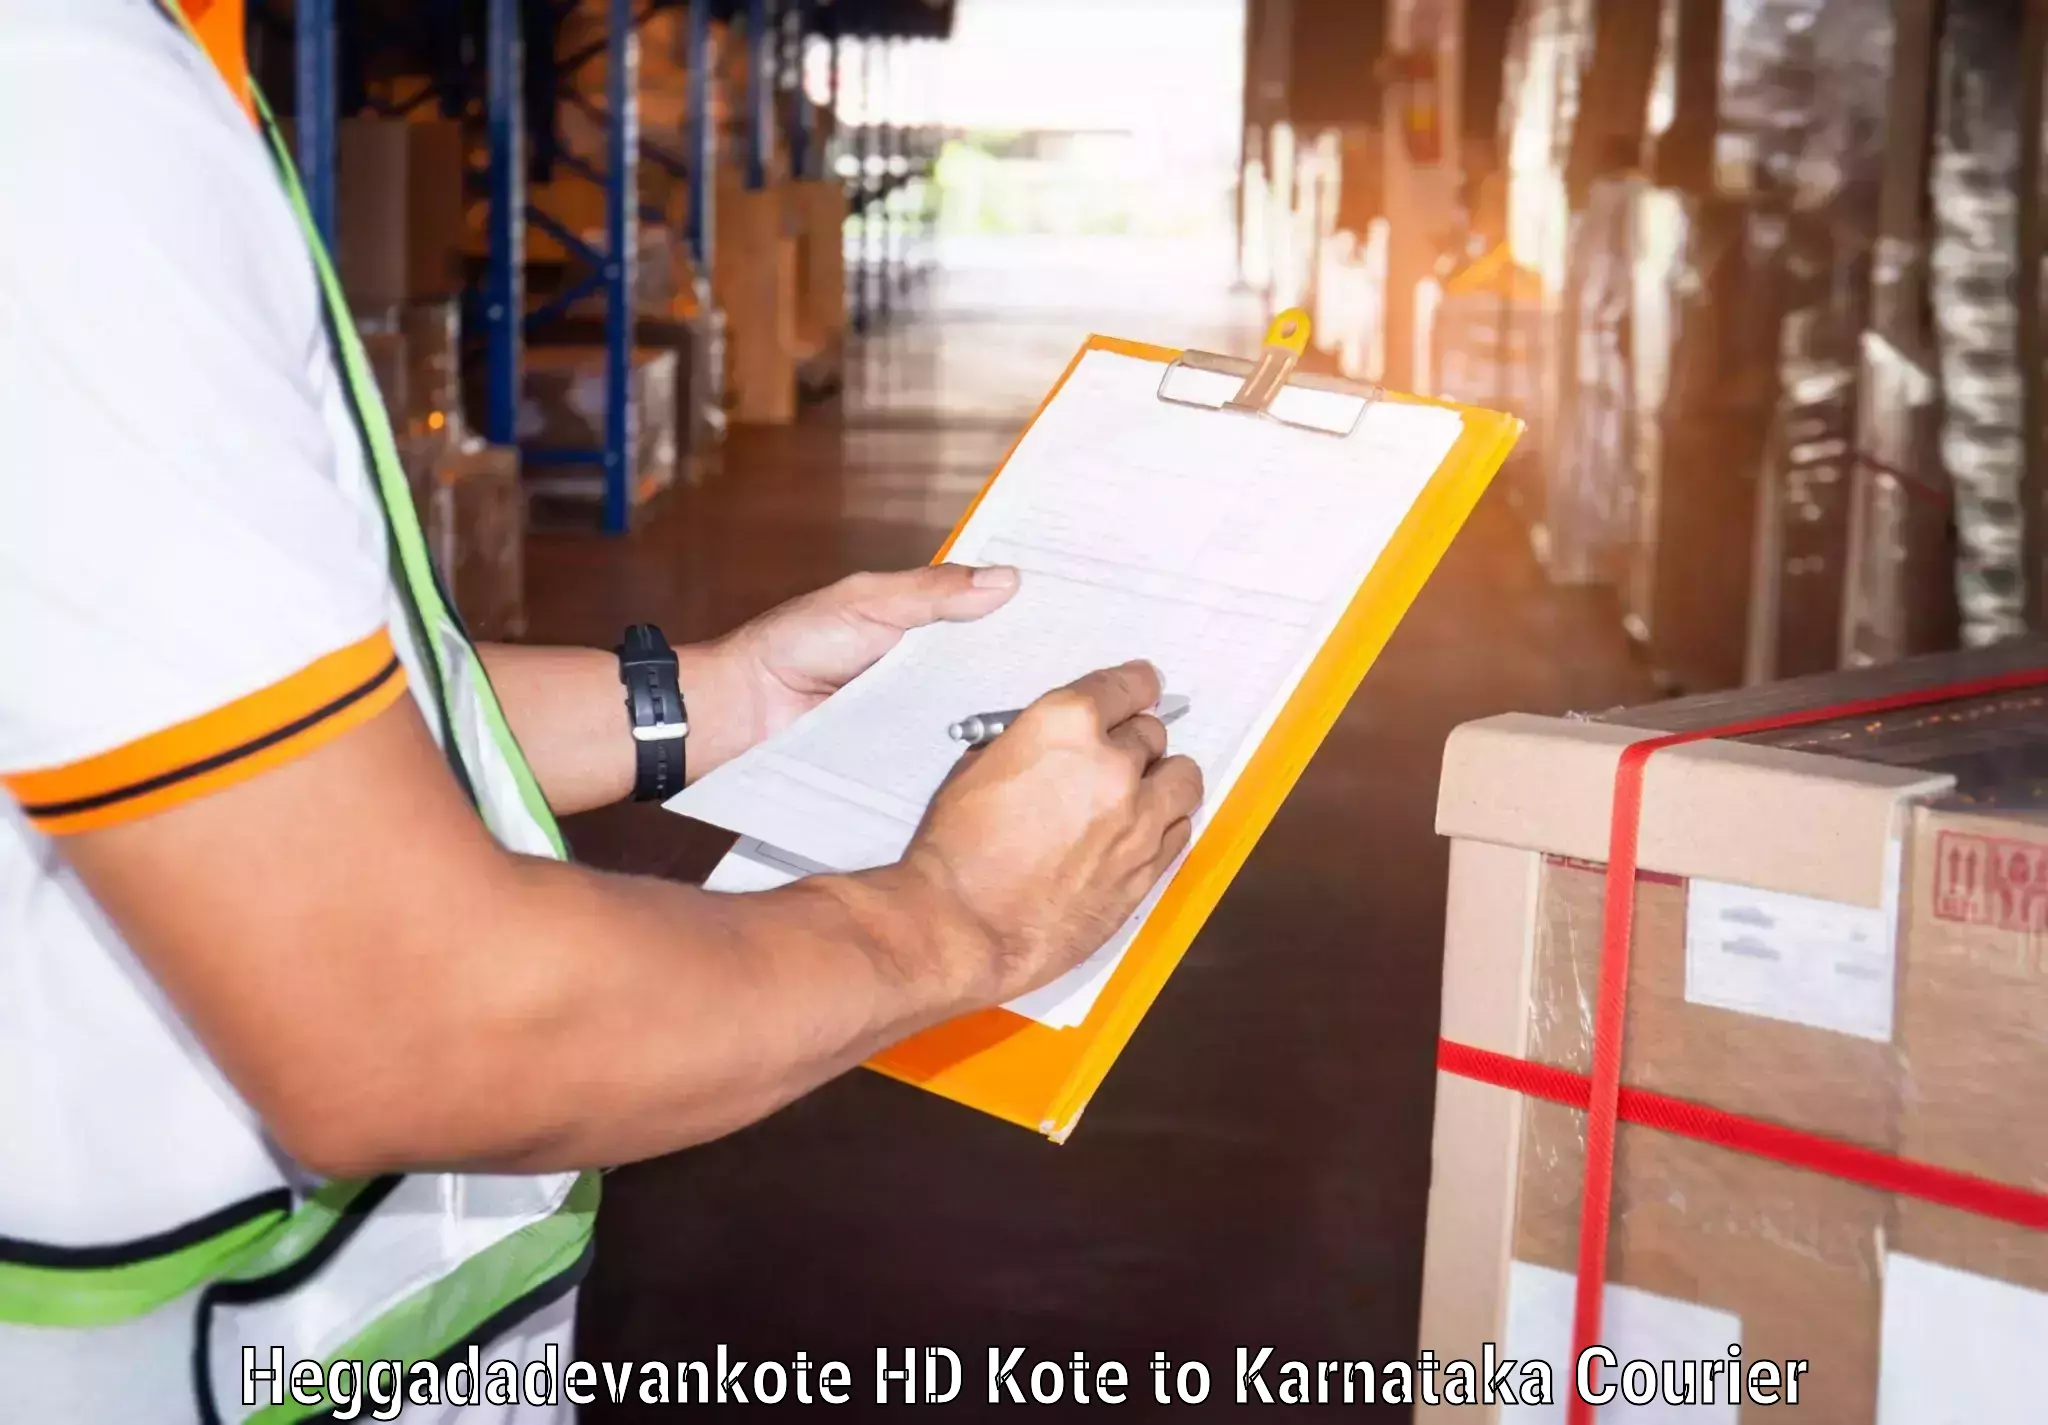 Cargo delivery service Heggadadevankote HD Kote to Mandya